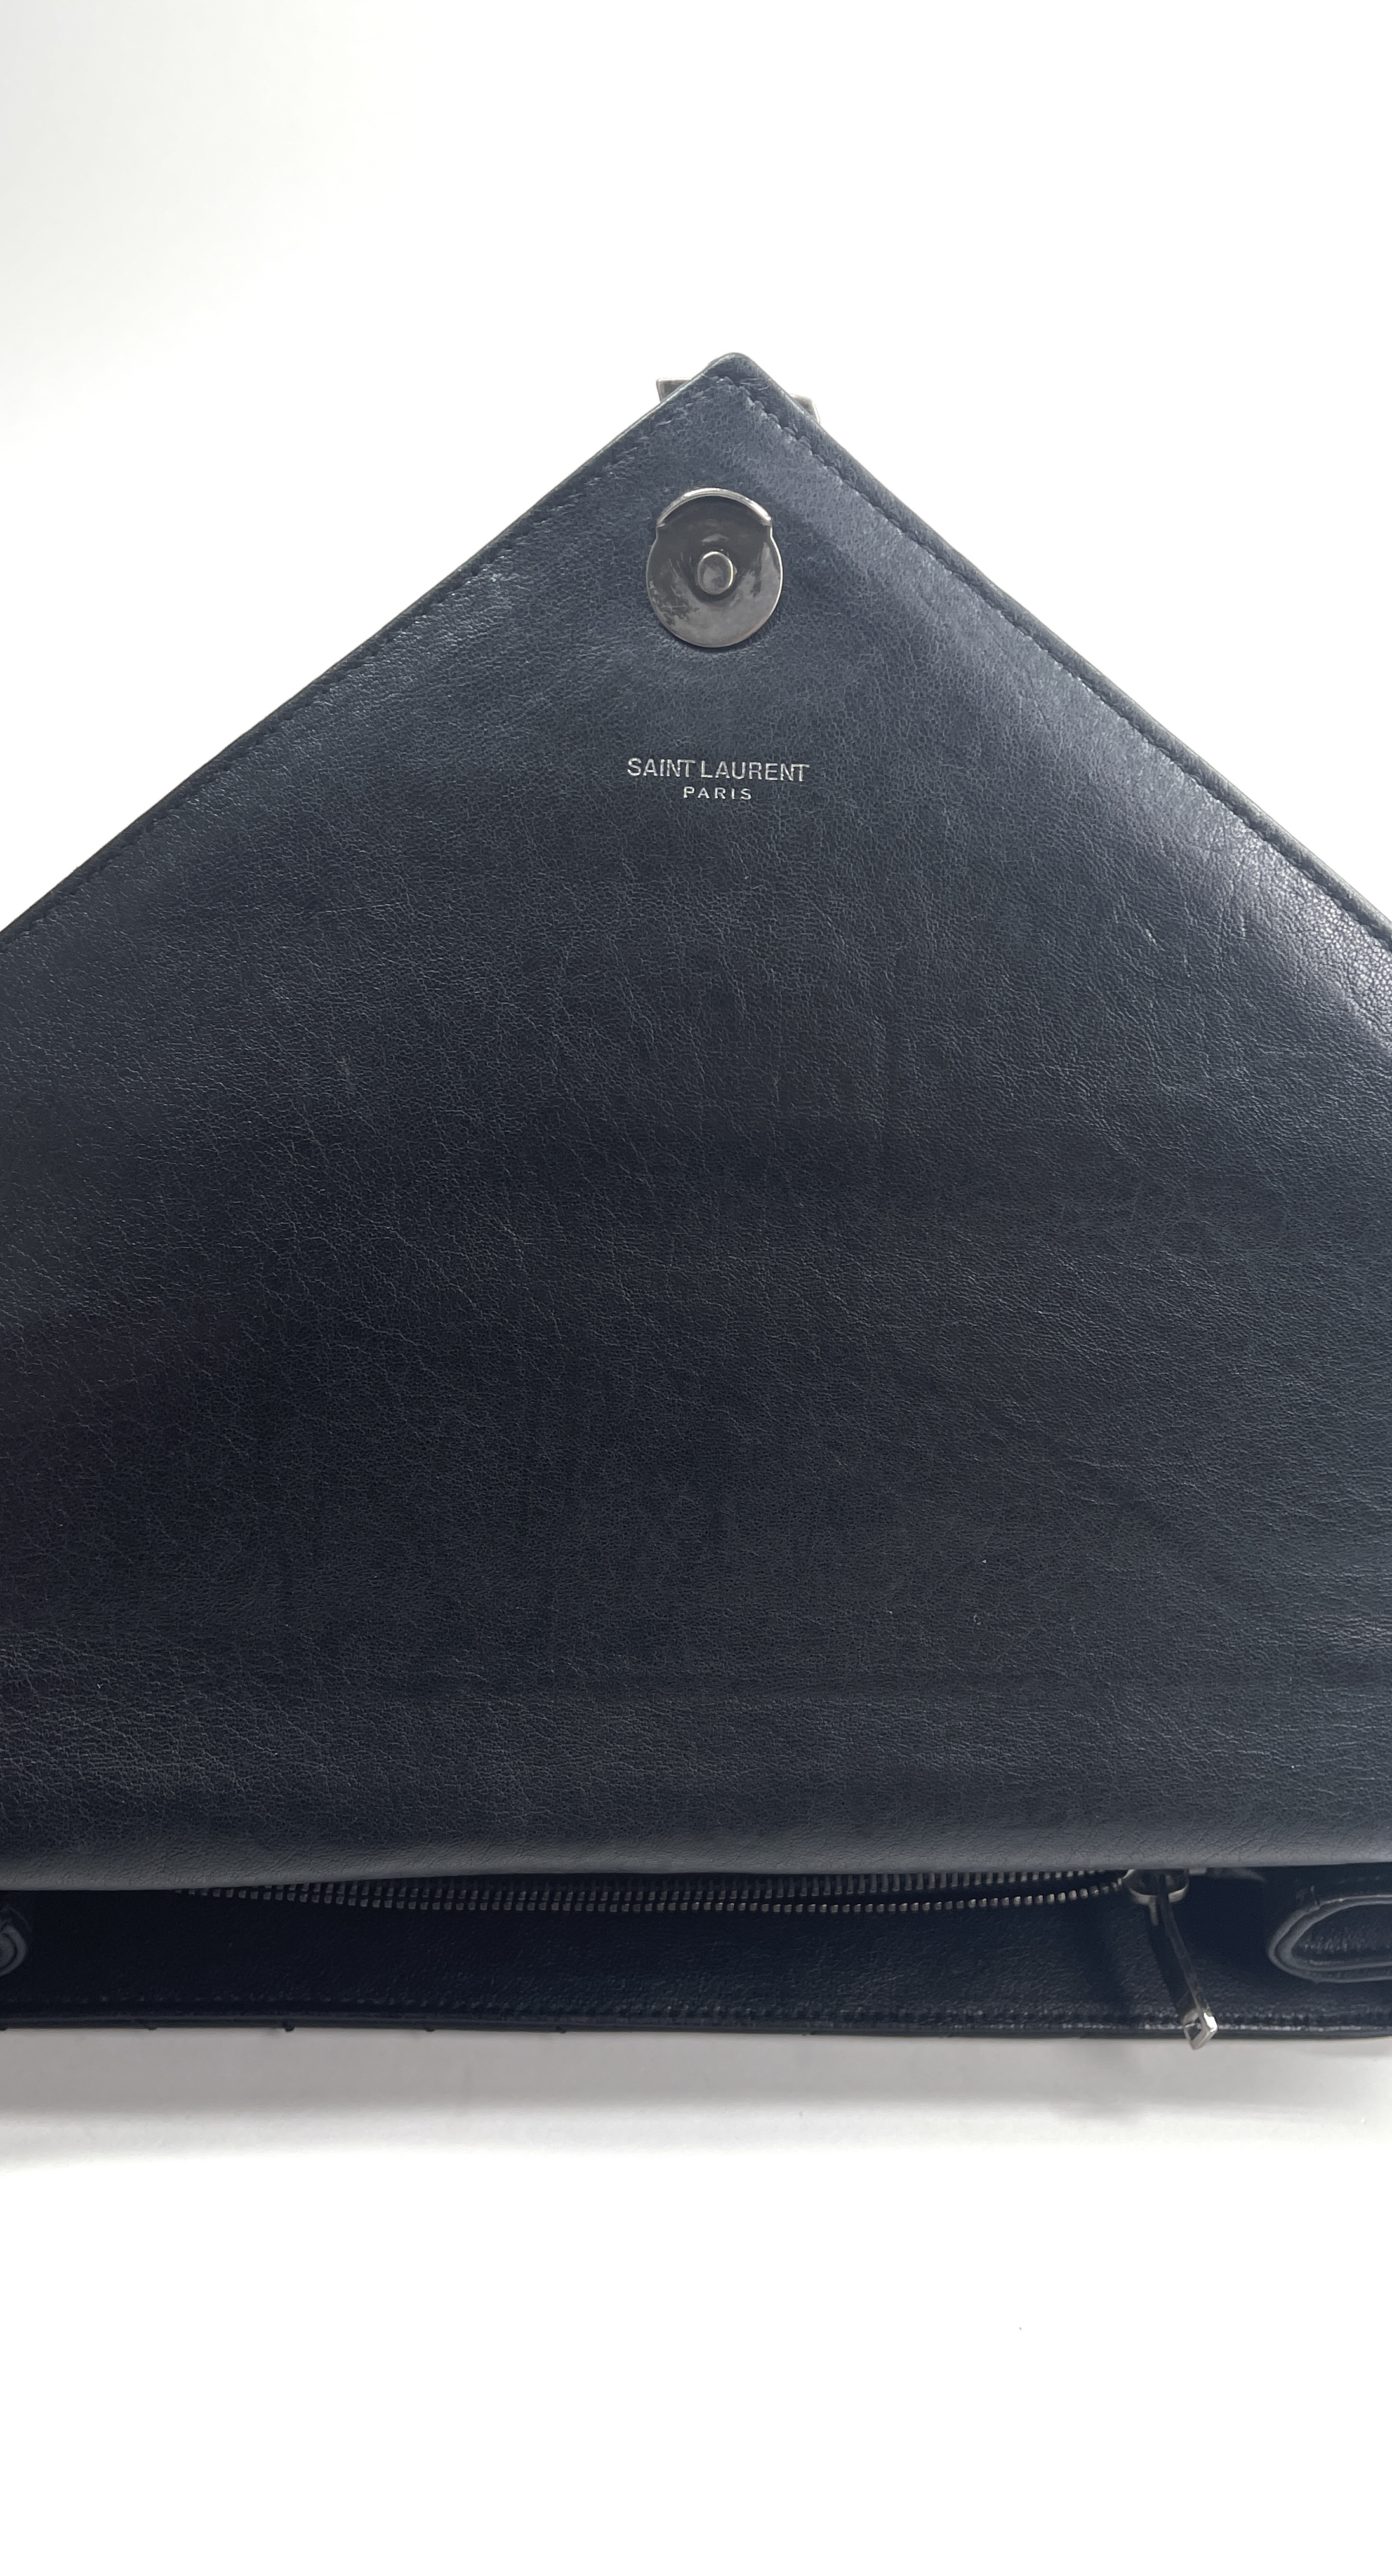 Saint Laurent Ysl Flap Quilted Leather Clutch Bag